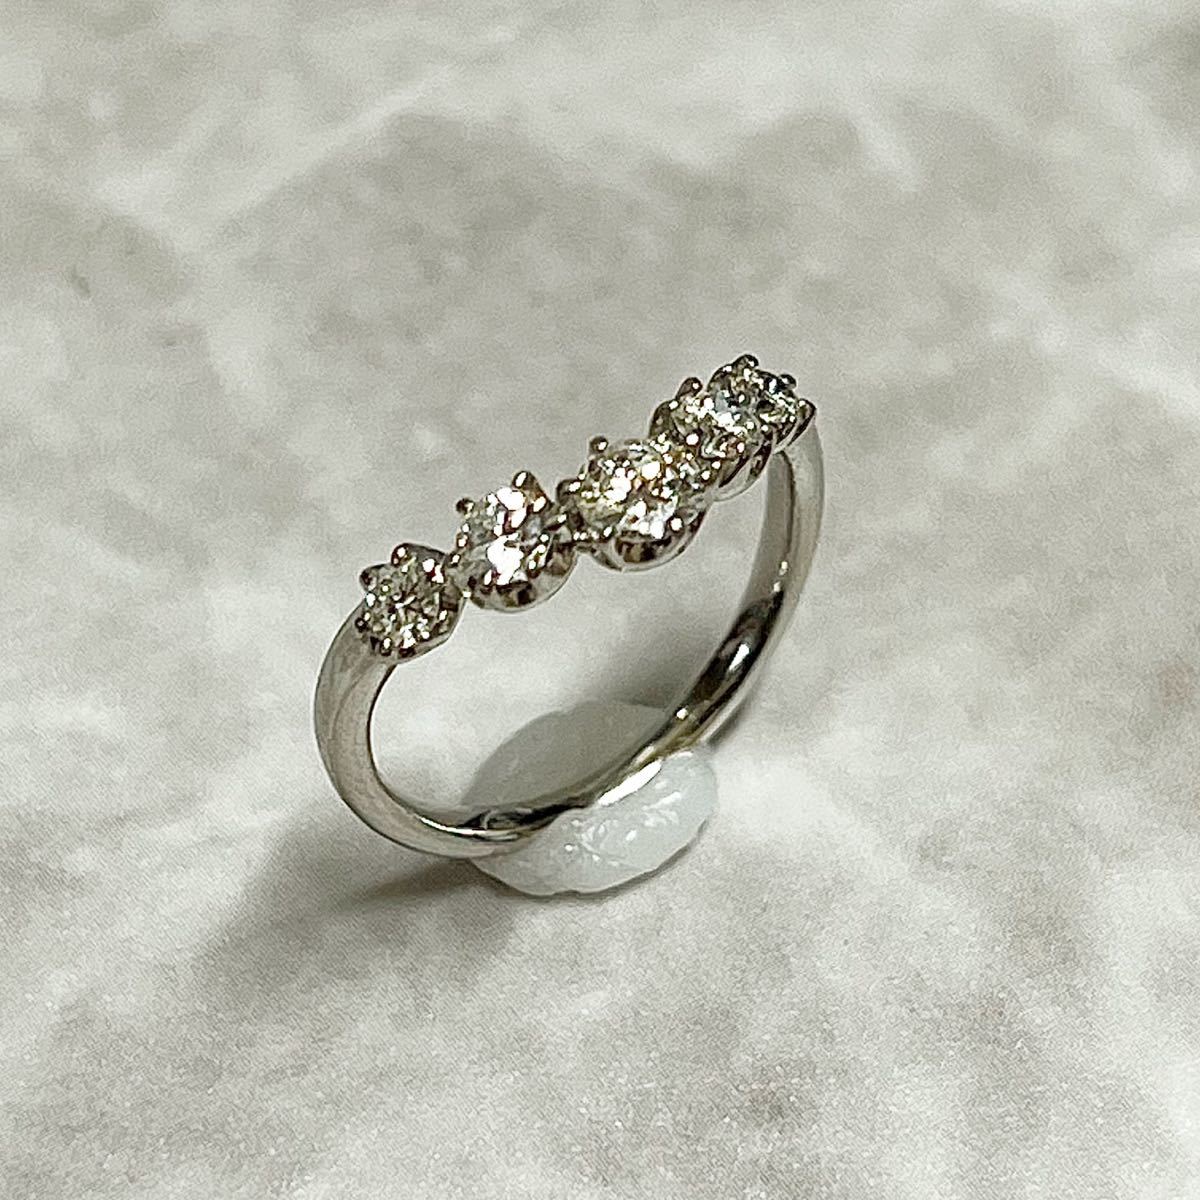 NEW 婚約指輪 安い エンゲージリング プラチナ ダイヤモンド 0.4